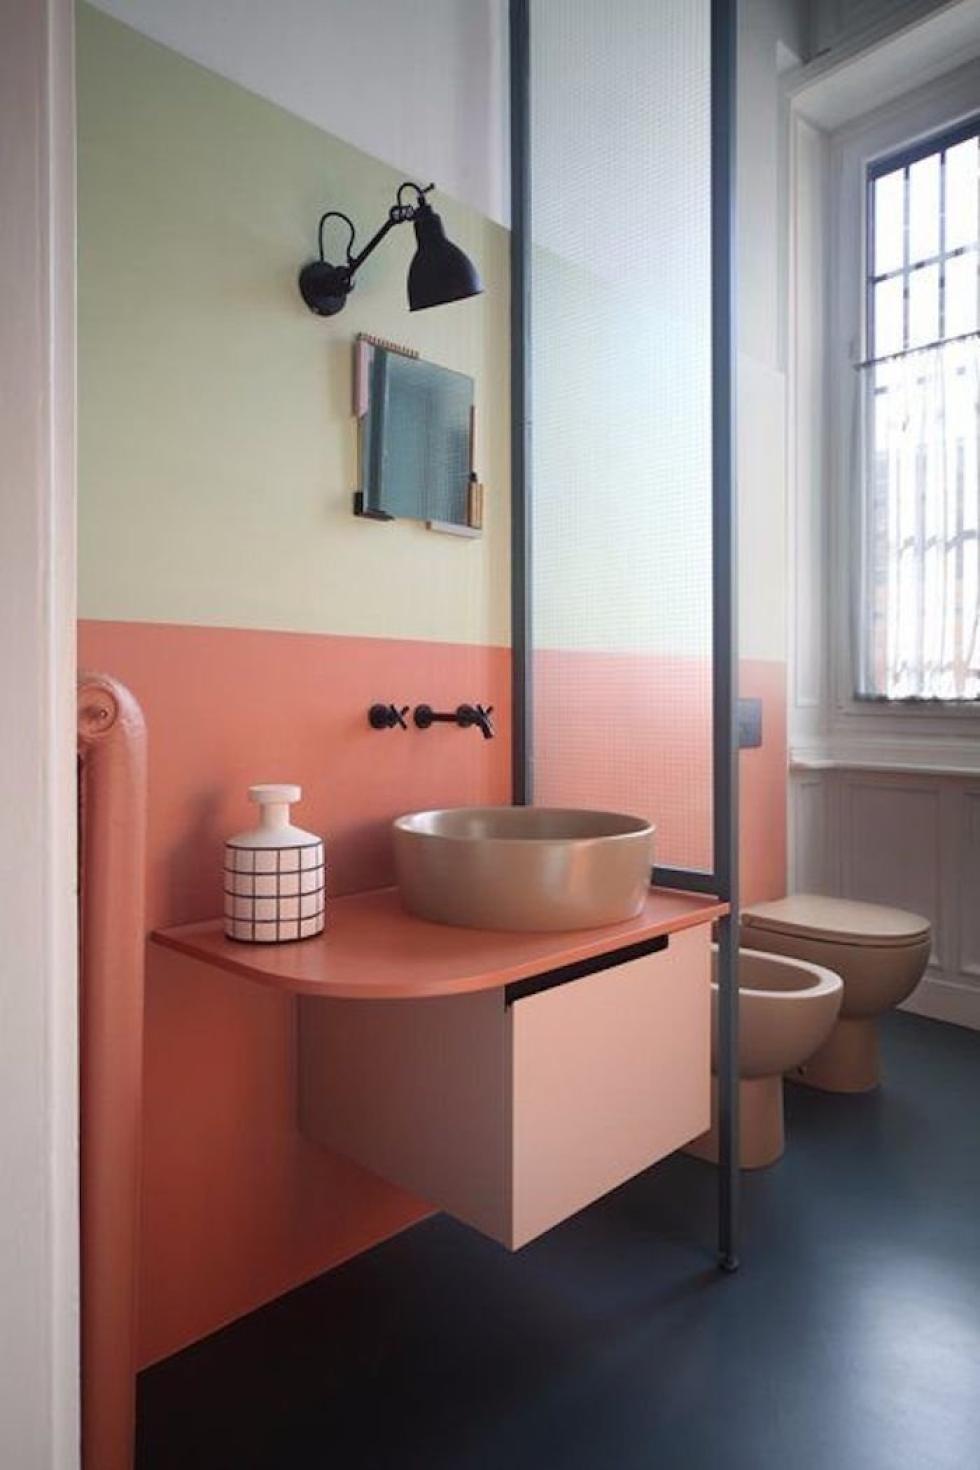 Bathroom in colour